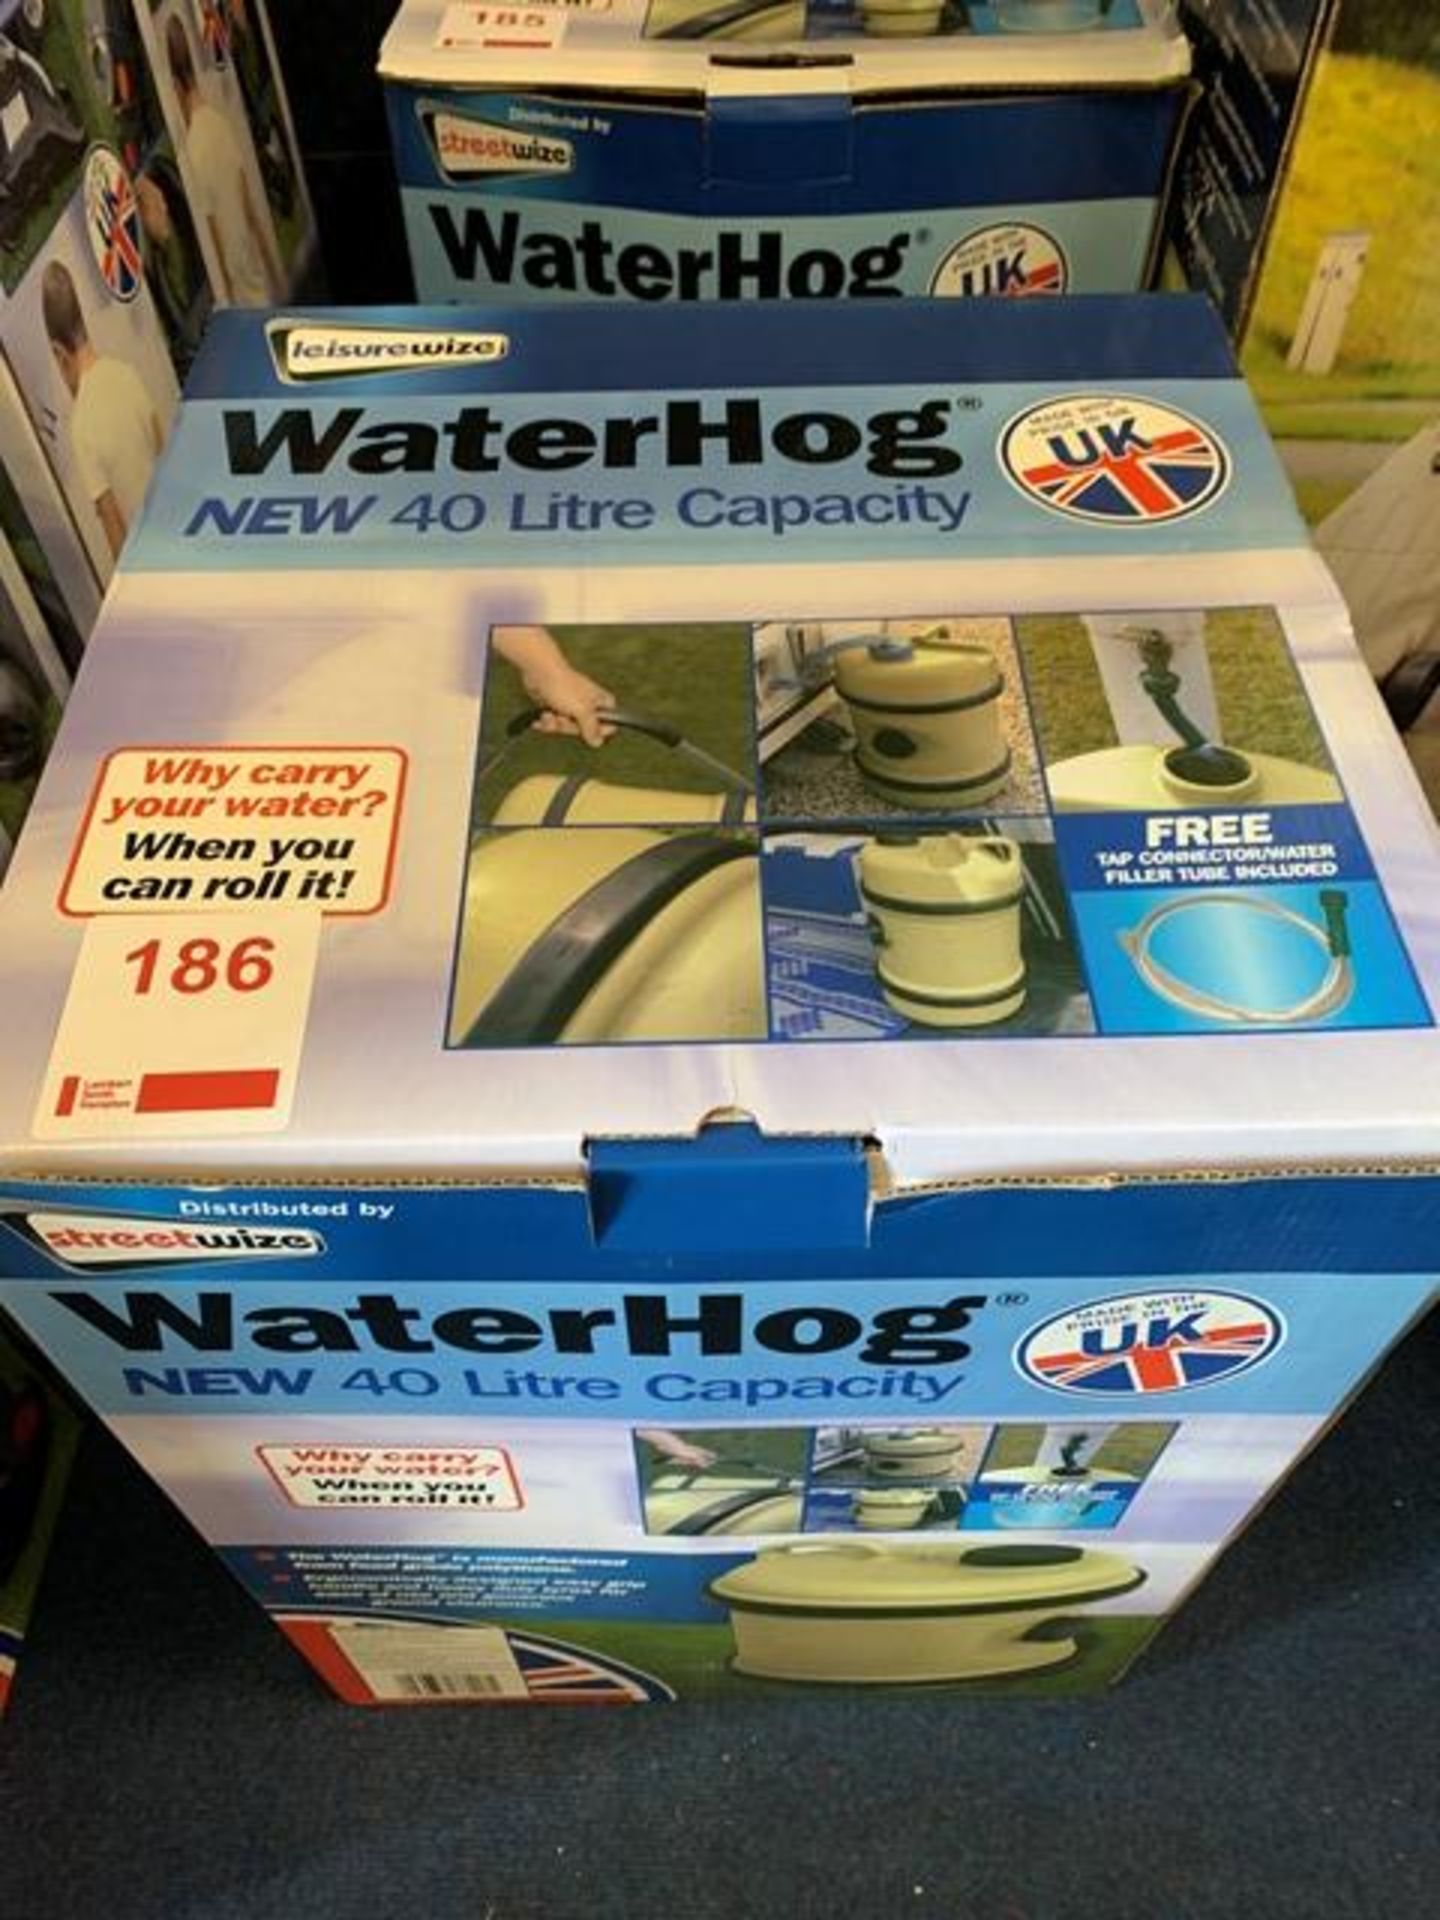 Leisurewize 40 litre water hog